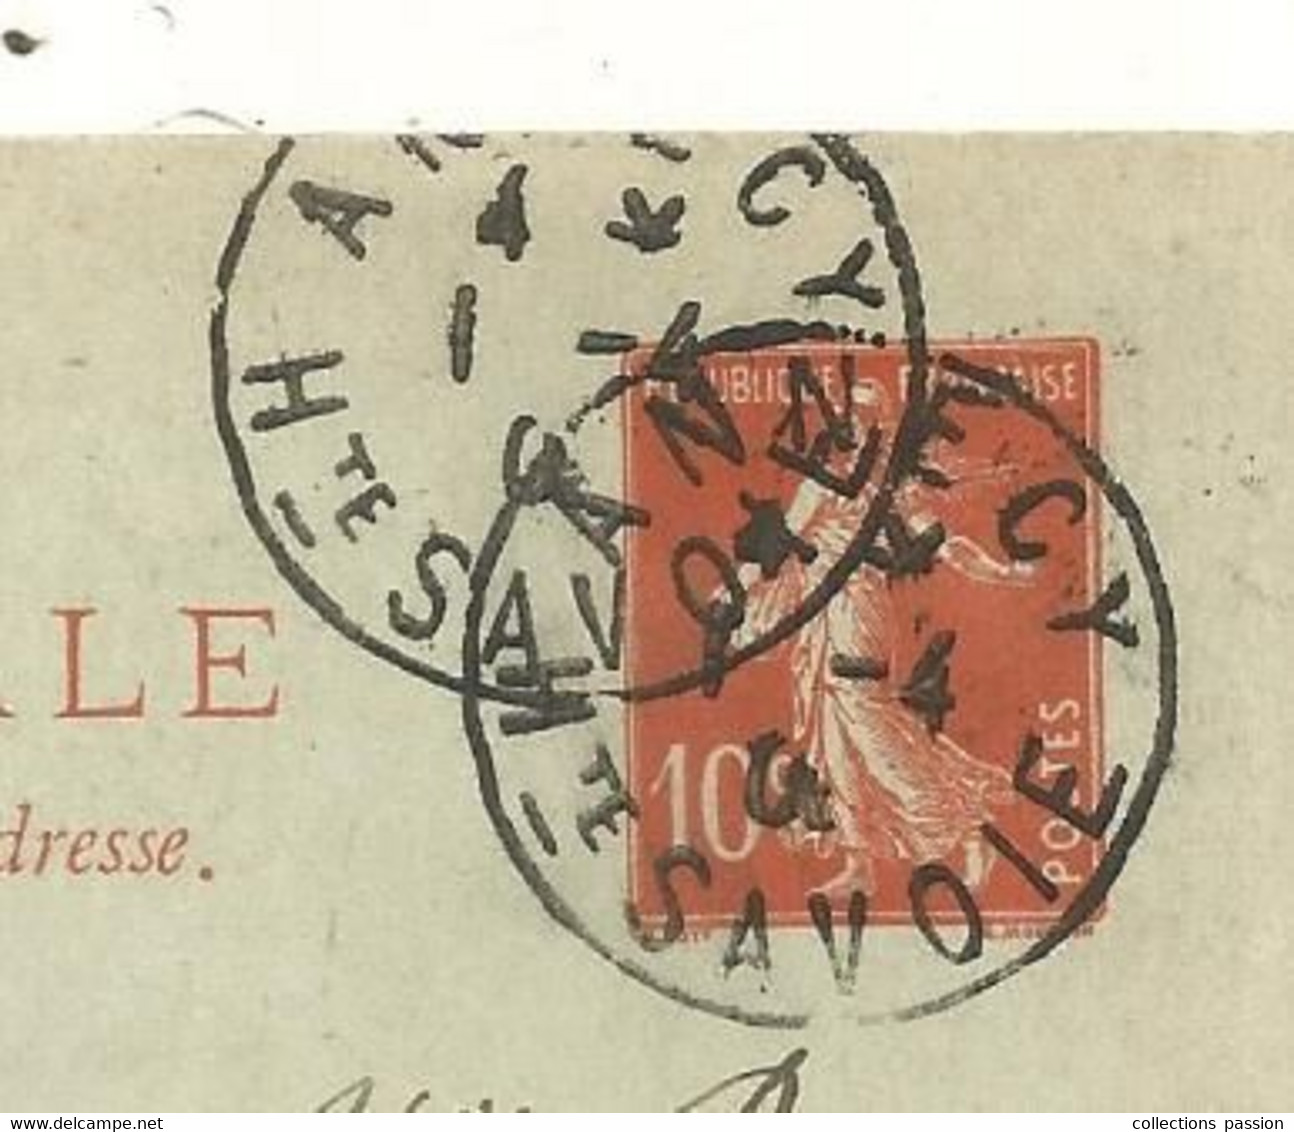 Entier Postal Sur Carte Postale, ANNECY , HAUTE SAVOIE, AUXERRE ,1909,  3 Scans - Standard Postcards & Stamped On Demand (before 1995)